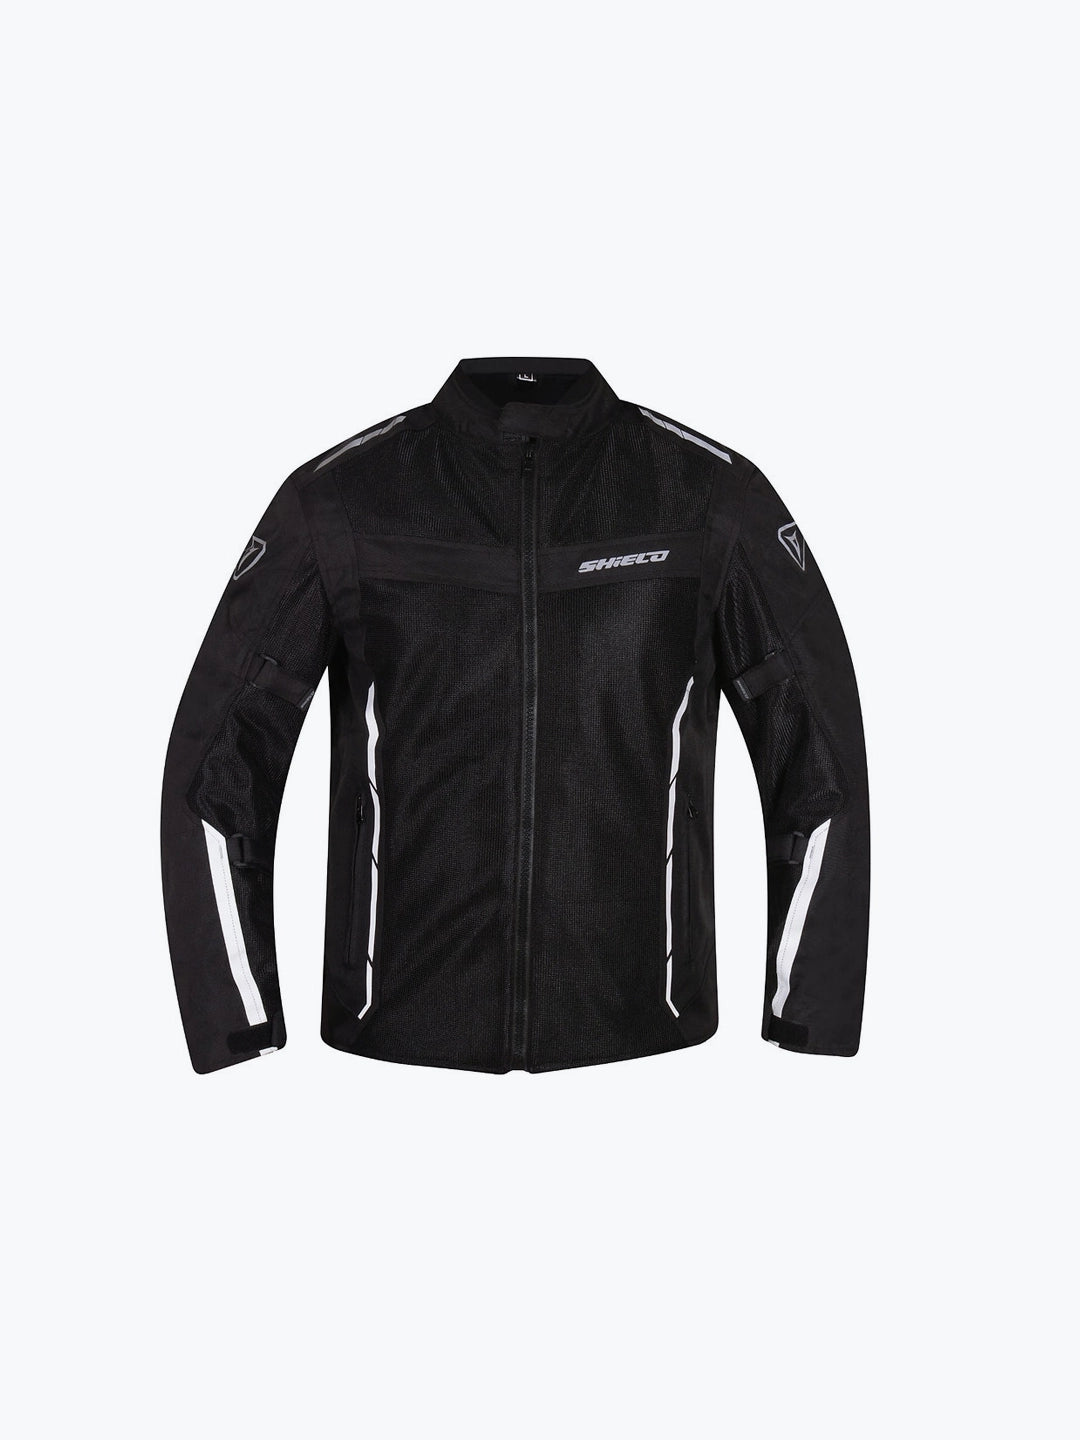 Shield Air GT Jacket Black White